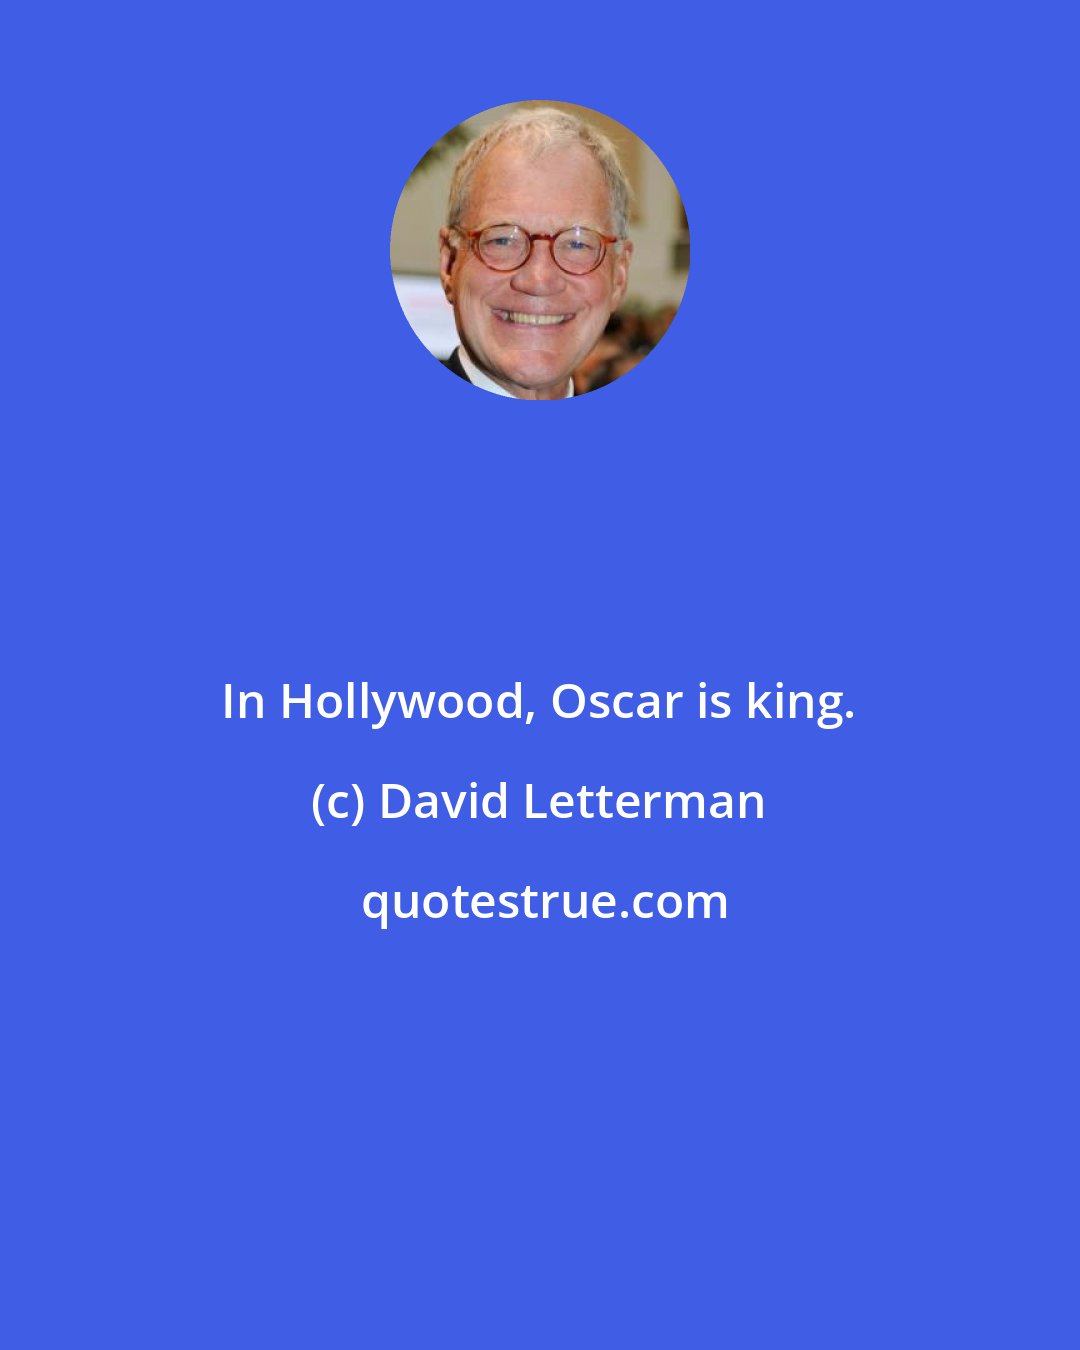 David Letterman: In Hollywood, Oscar is king.